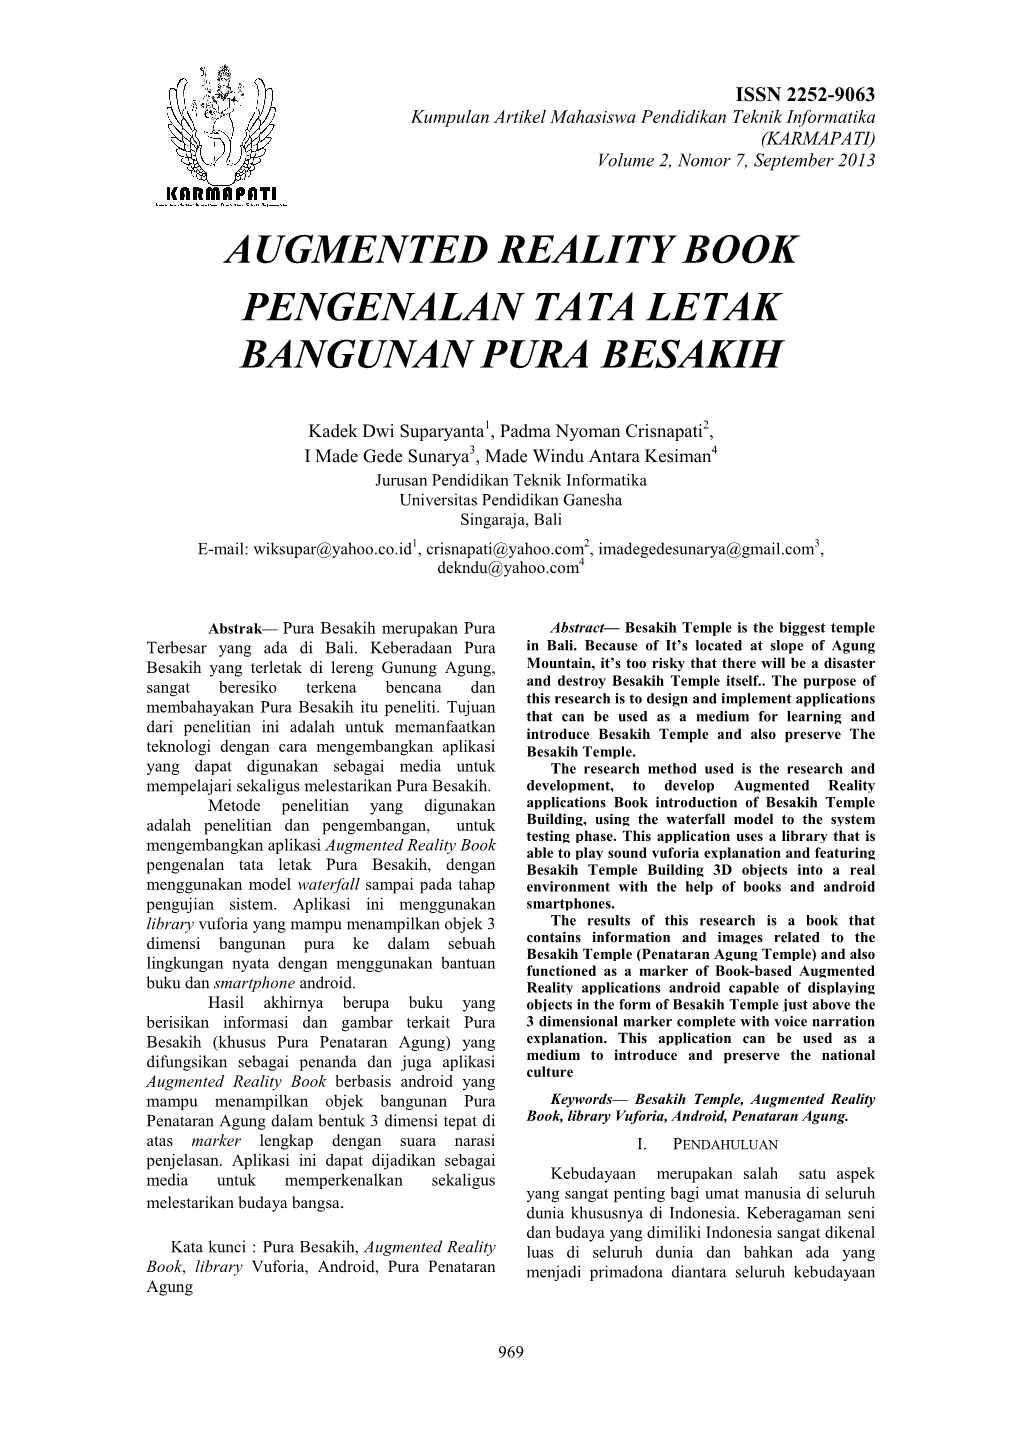 Augmented Reality Book Pengenalan Tata Letak Bangunan Pura Besakih